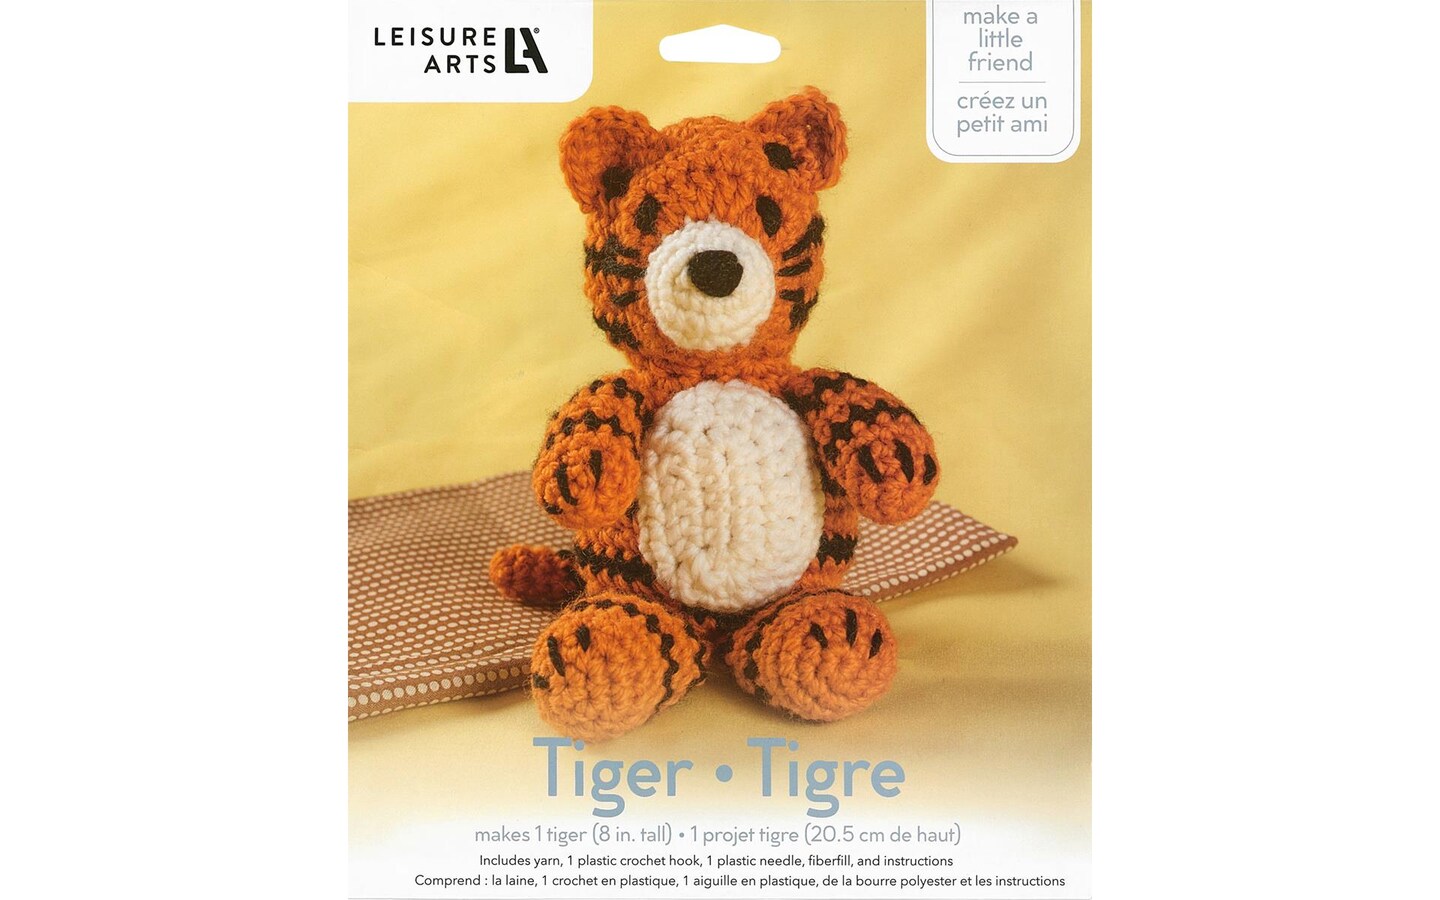 DIY Beginner Crochet Kit (Bear) 